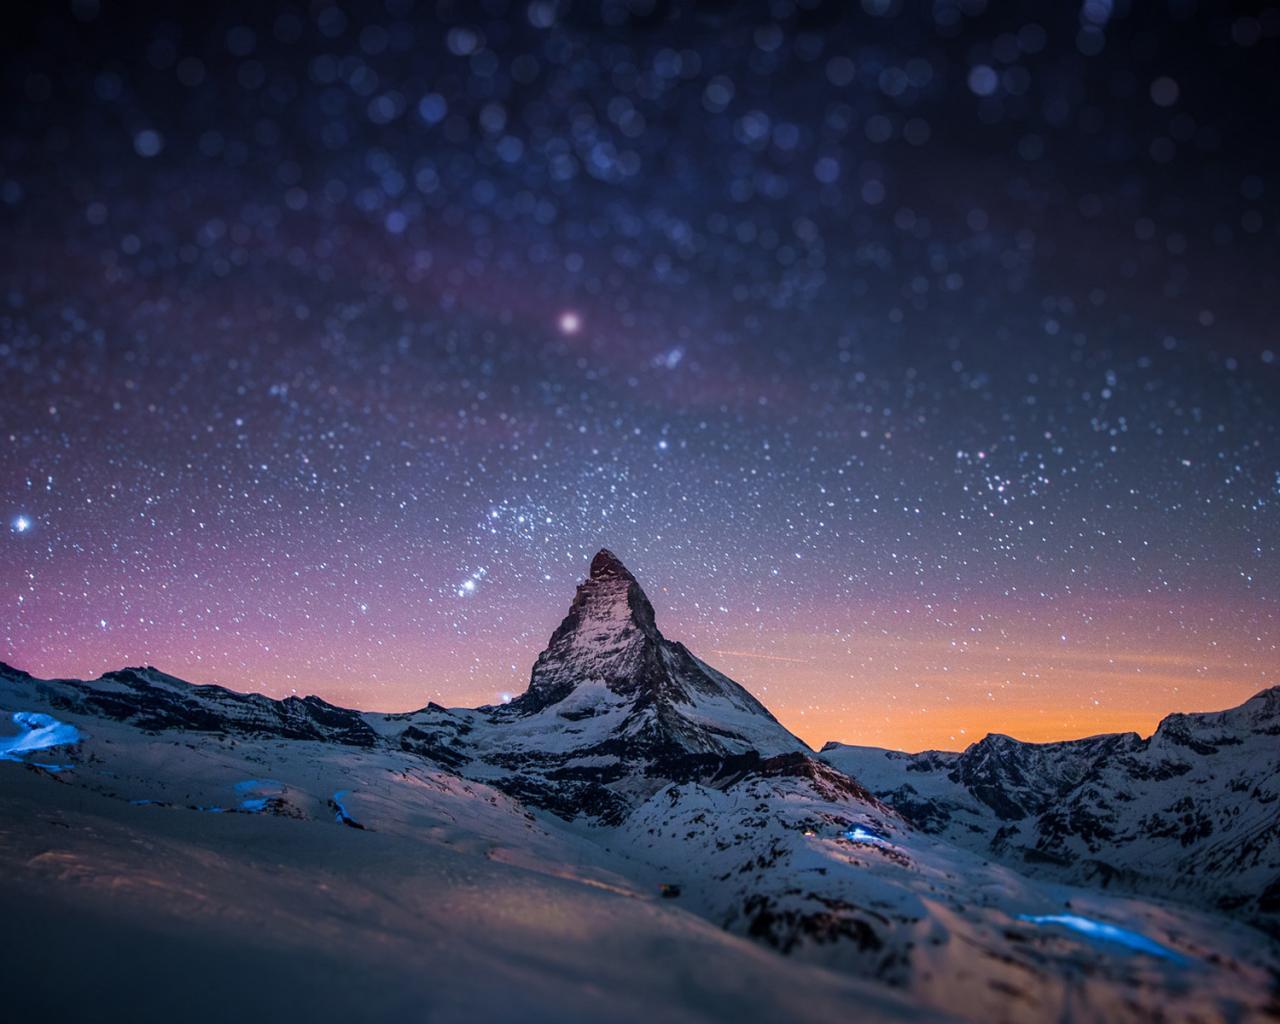 The Matterhorn mountain in Switzerland under a starry sky - 1280x1024